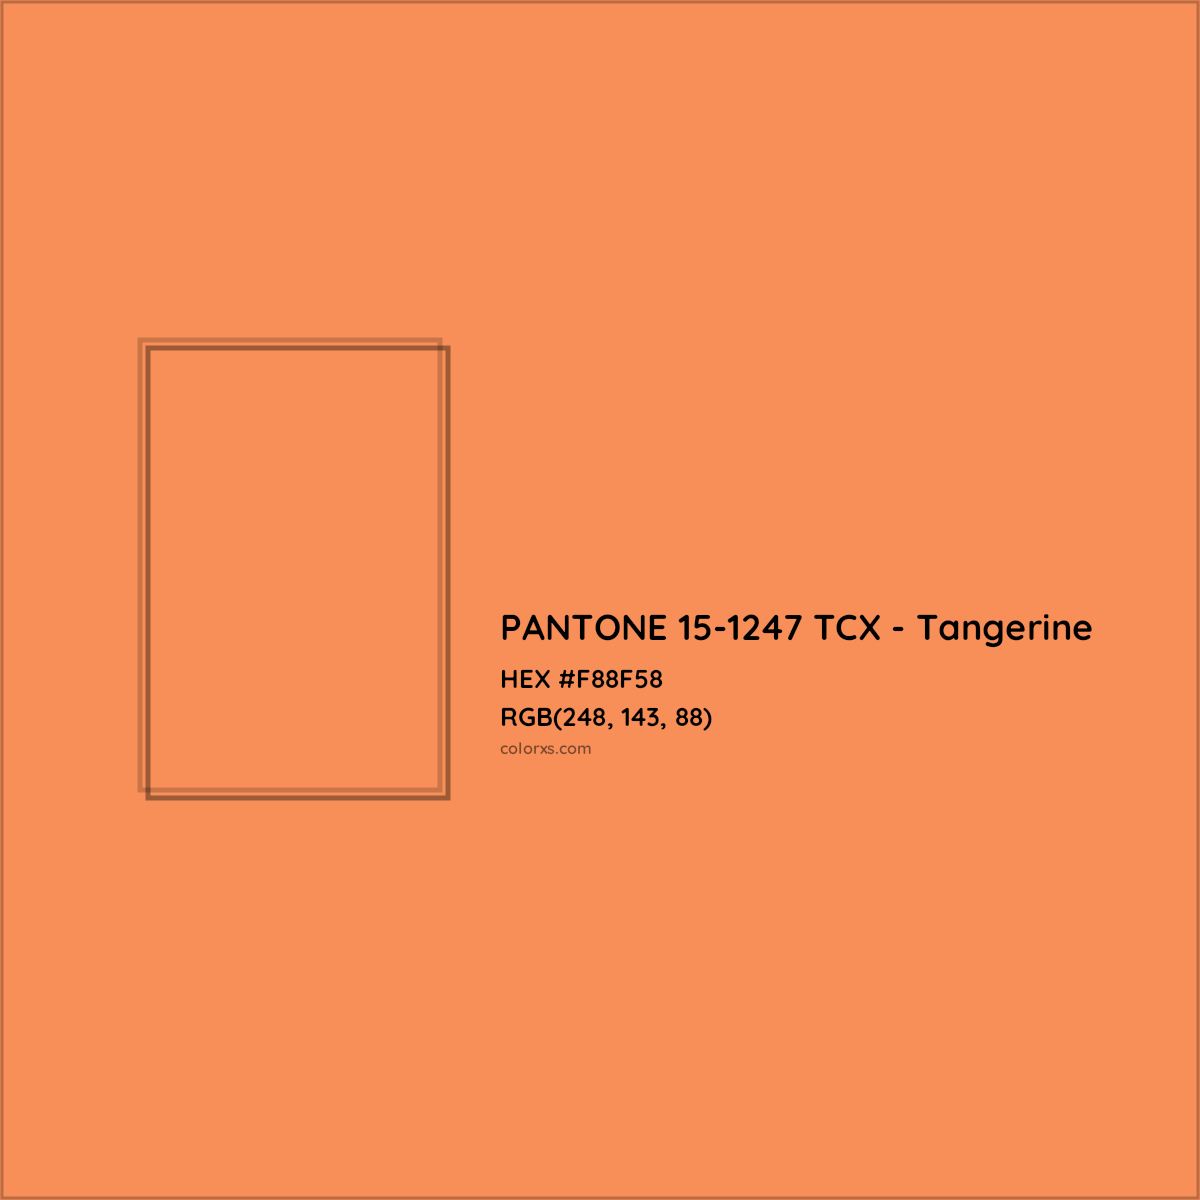 HEX #F88F58 PANTONE 15-1247 TCX - Tangerine CMS Pantone TCX - Color Code